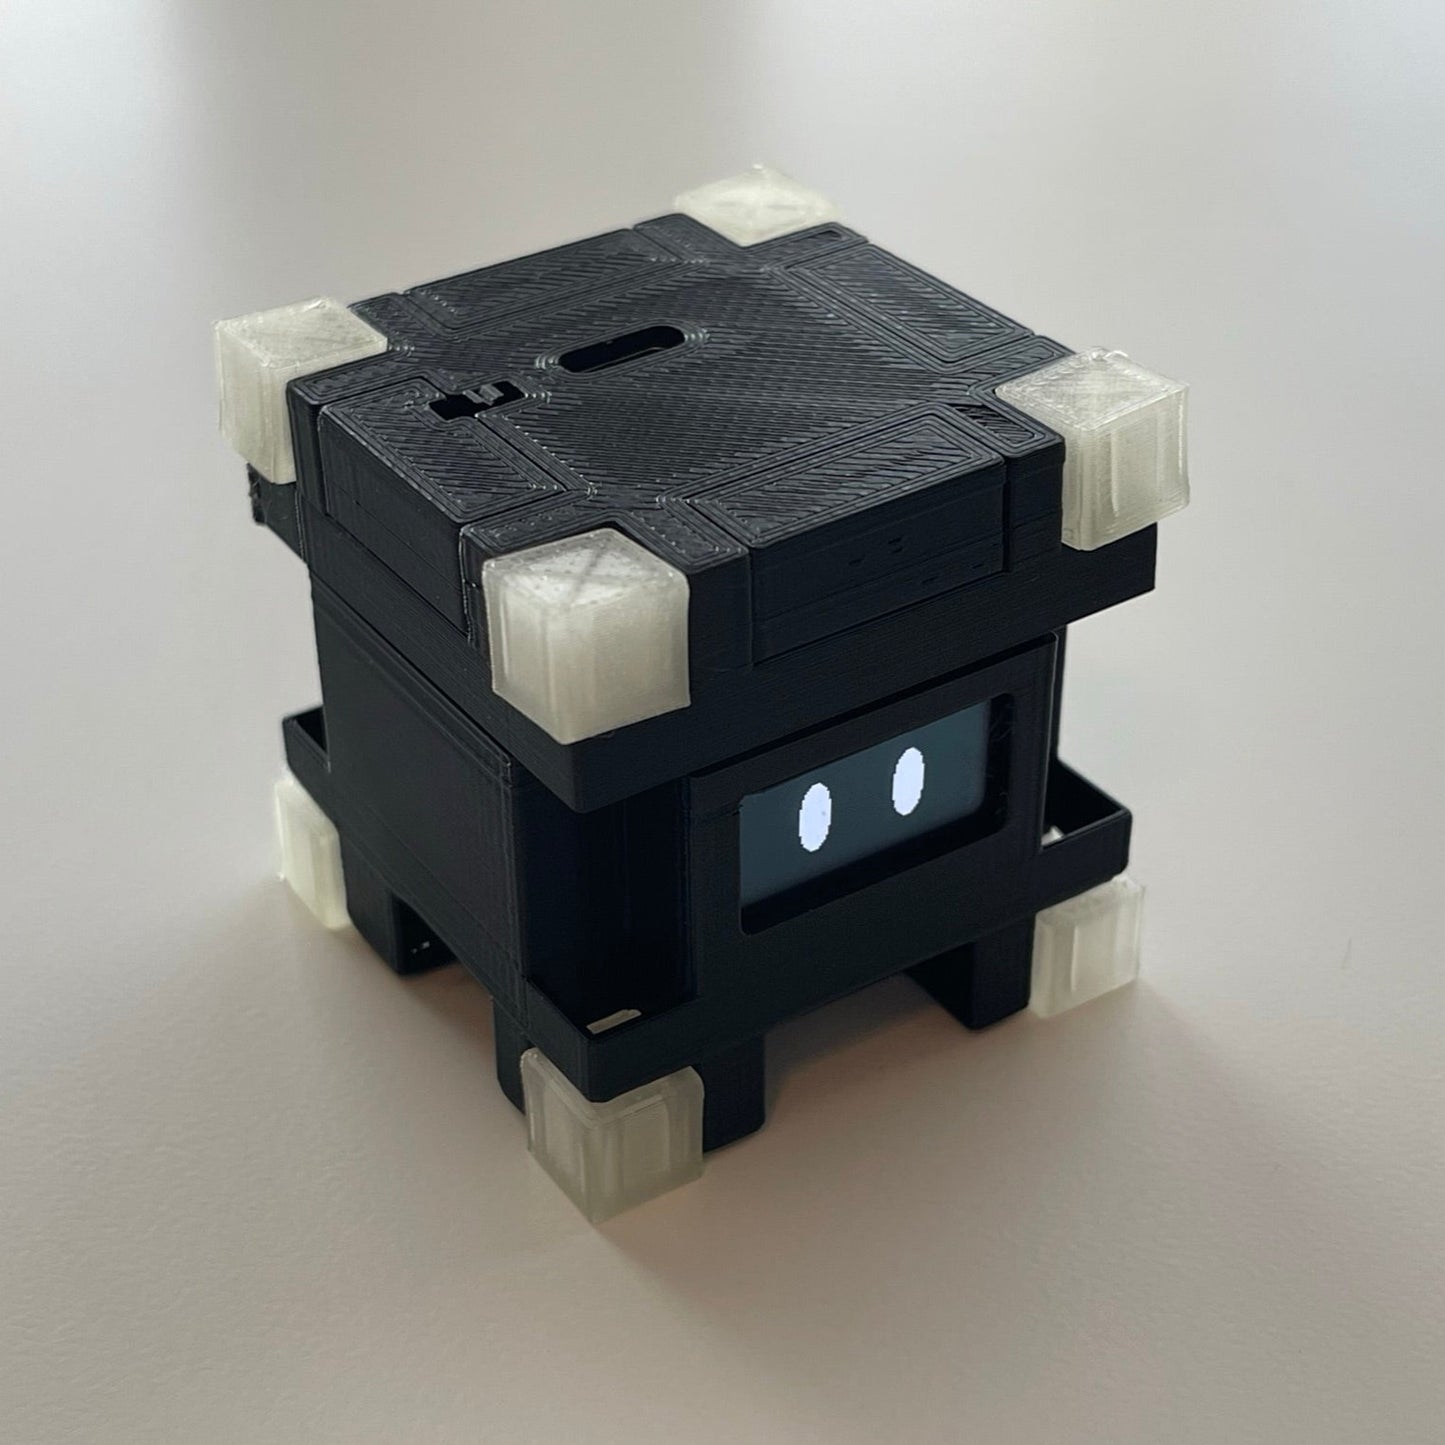 Vectomi Cube DIY Kit - Limited Availability